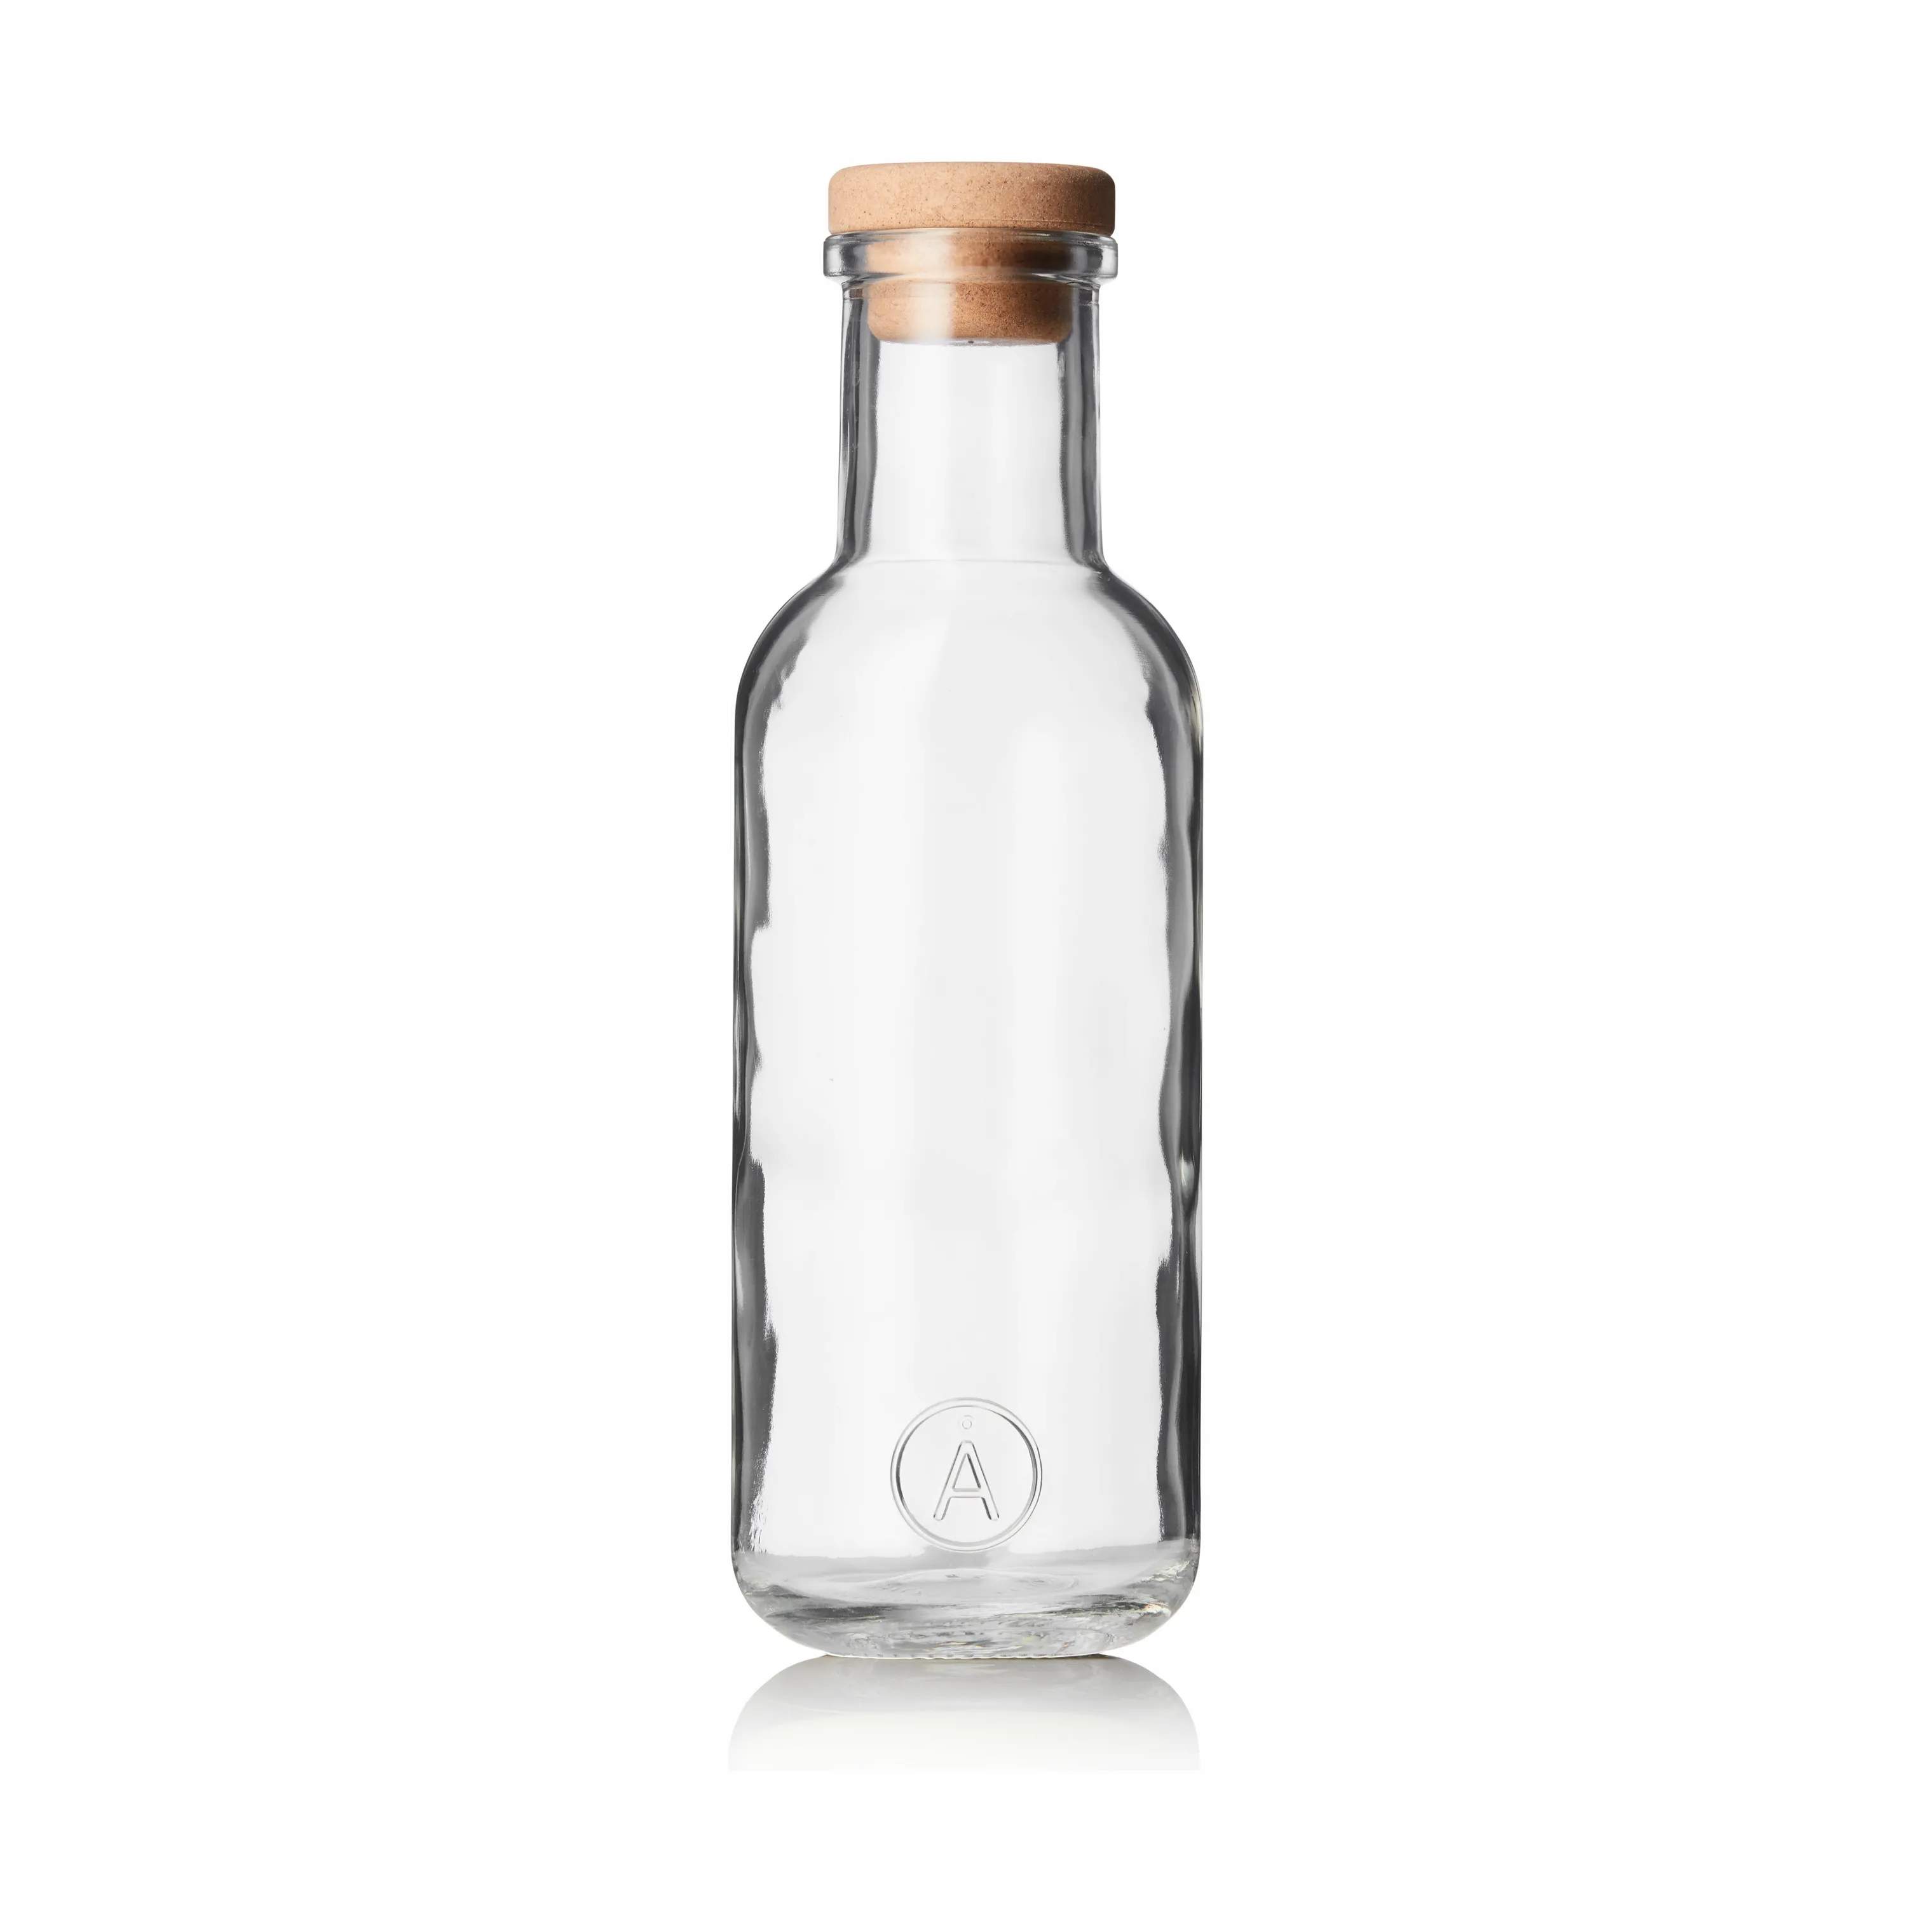 MALUND patentflasker Bottle